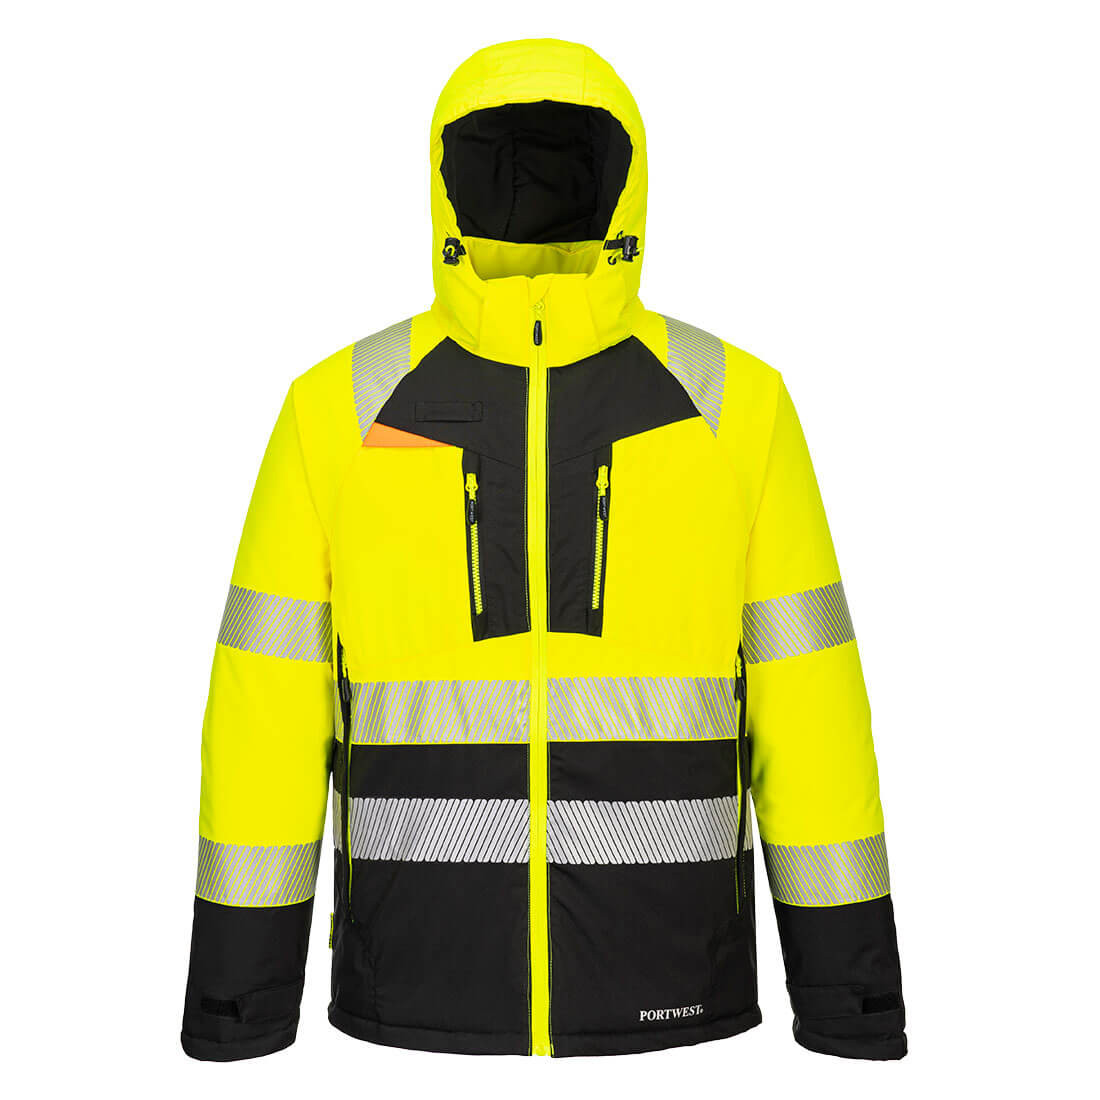 DX4 Hi-Vis Class 2 Winter Jacket - Safetywear